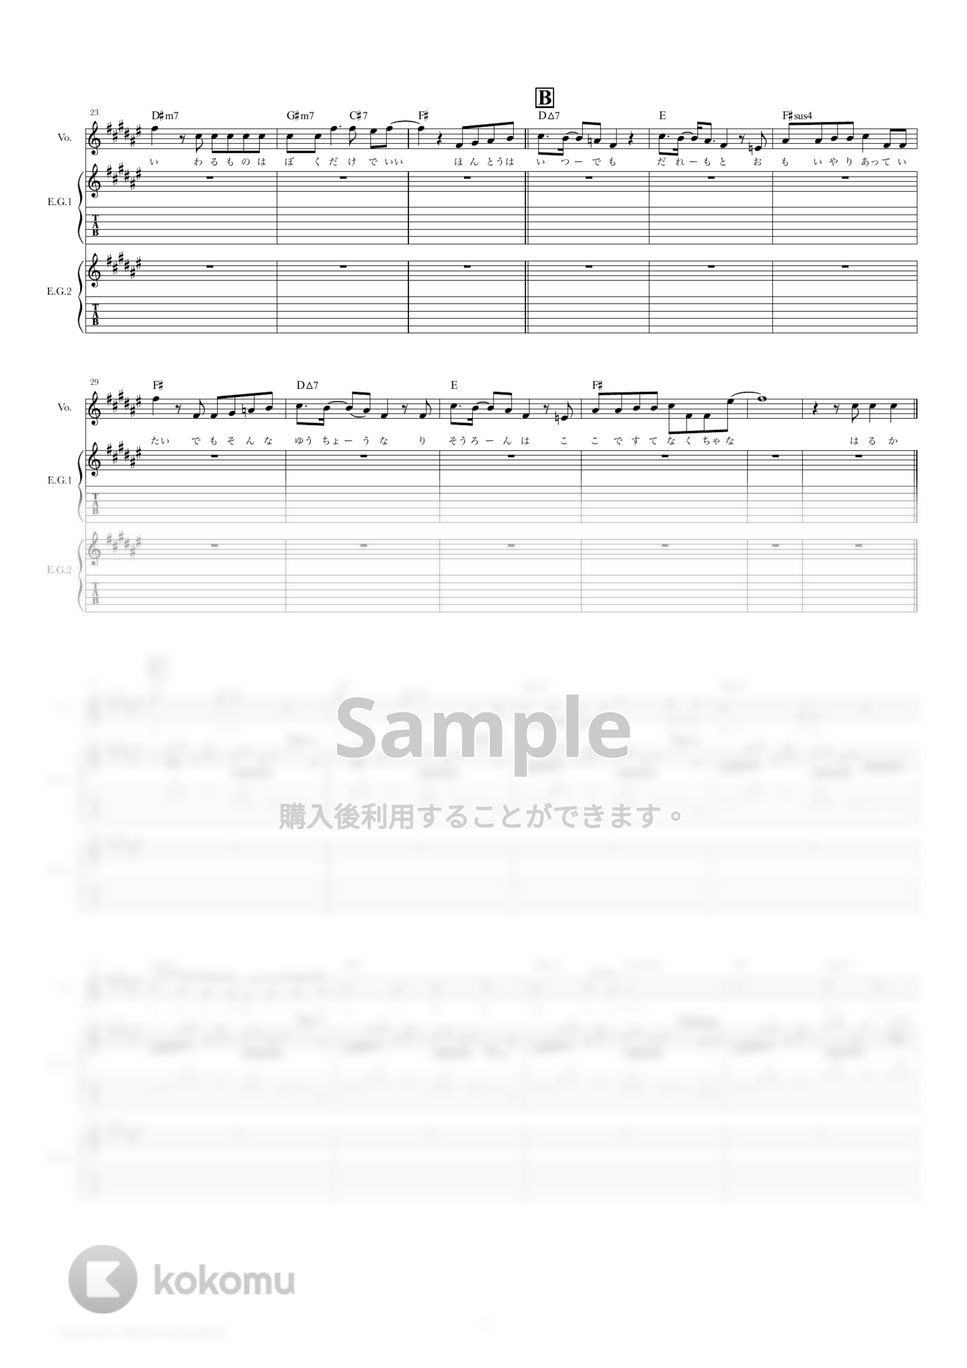 Official髭男dism - イエスタデイ (ギタースコア・歌詞・コード付き) by TRIAD GUITAR SCHOOL